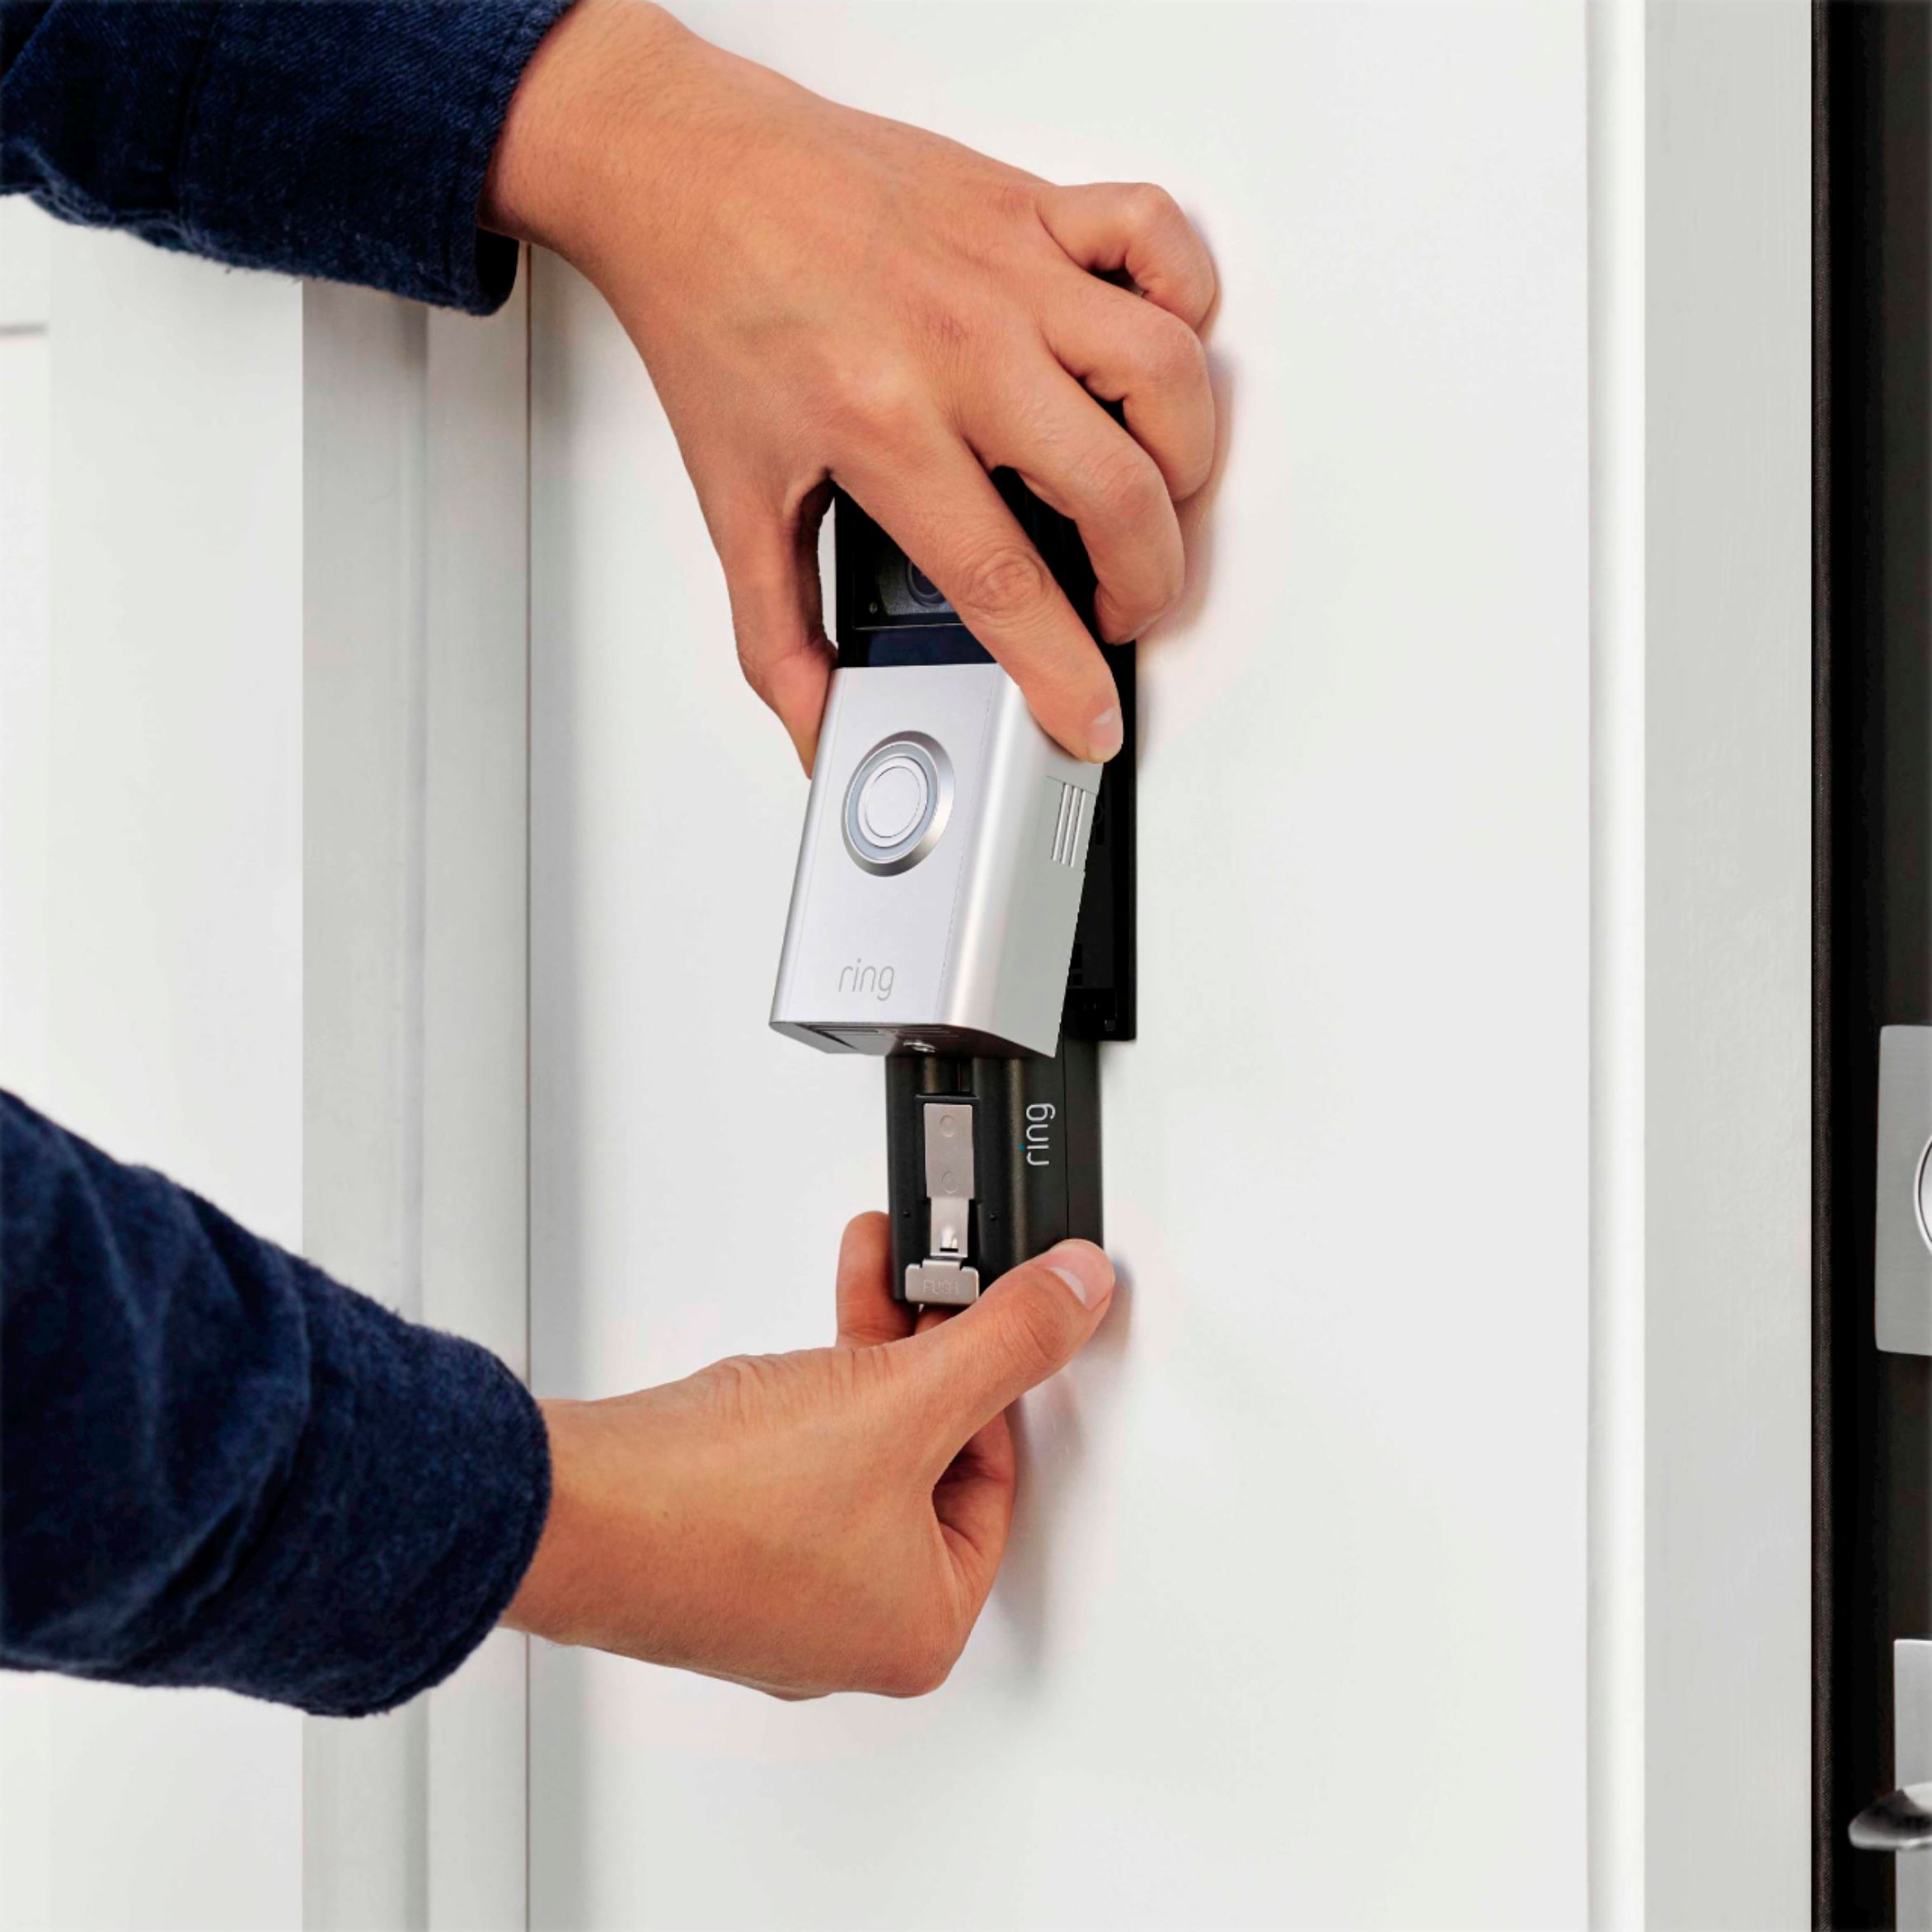 Ring Battery Doorbell Plus Smart Wifi Video Doorbell – Battery Operated  with Head-to-Toe View Satin Nickel B09WZBPX7K - Best Buy